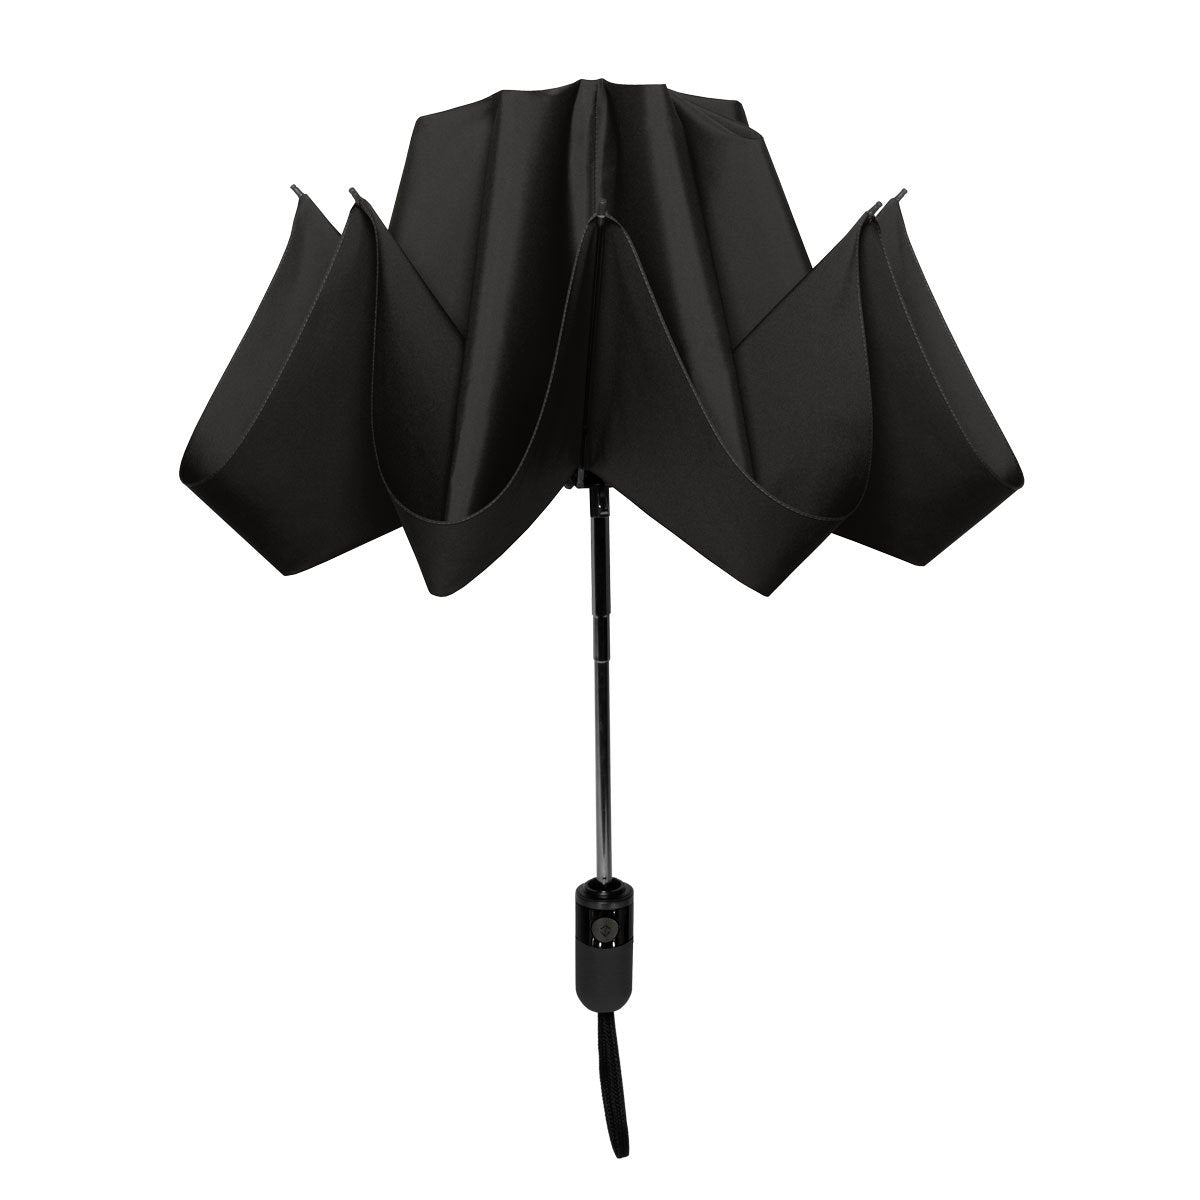 UnbelievaBrella Reverse Auto Open & Close Umbrella    